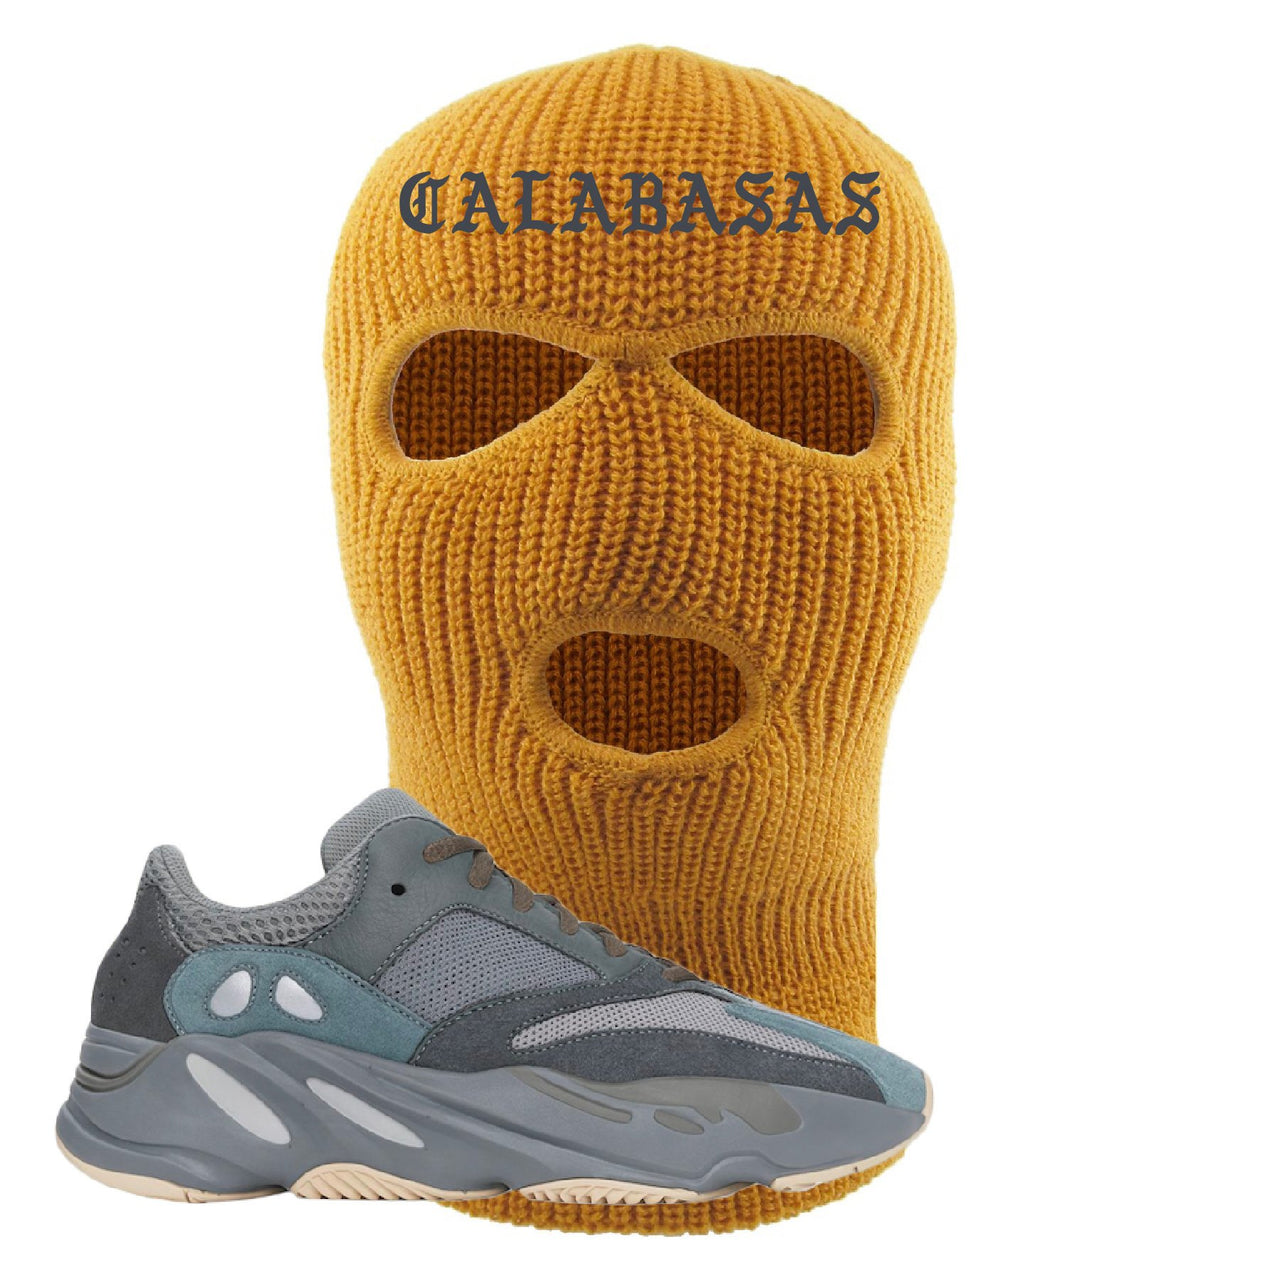 Yeezy Boost 700 Teal Blue Calabasas Timberland Sneaker Hook Up Ski Mask